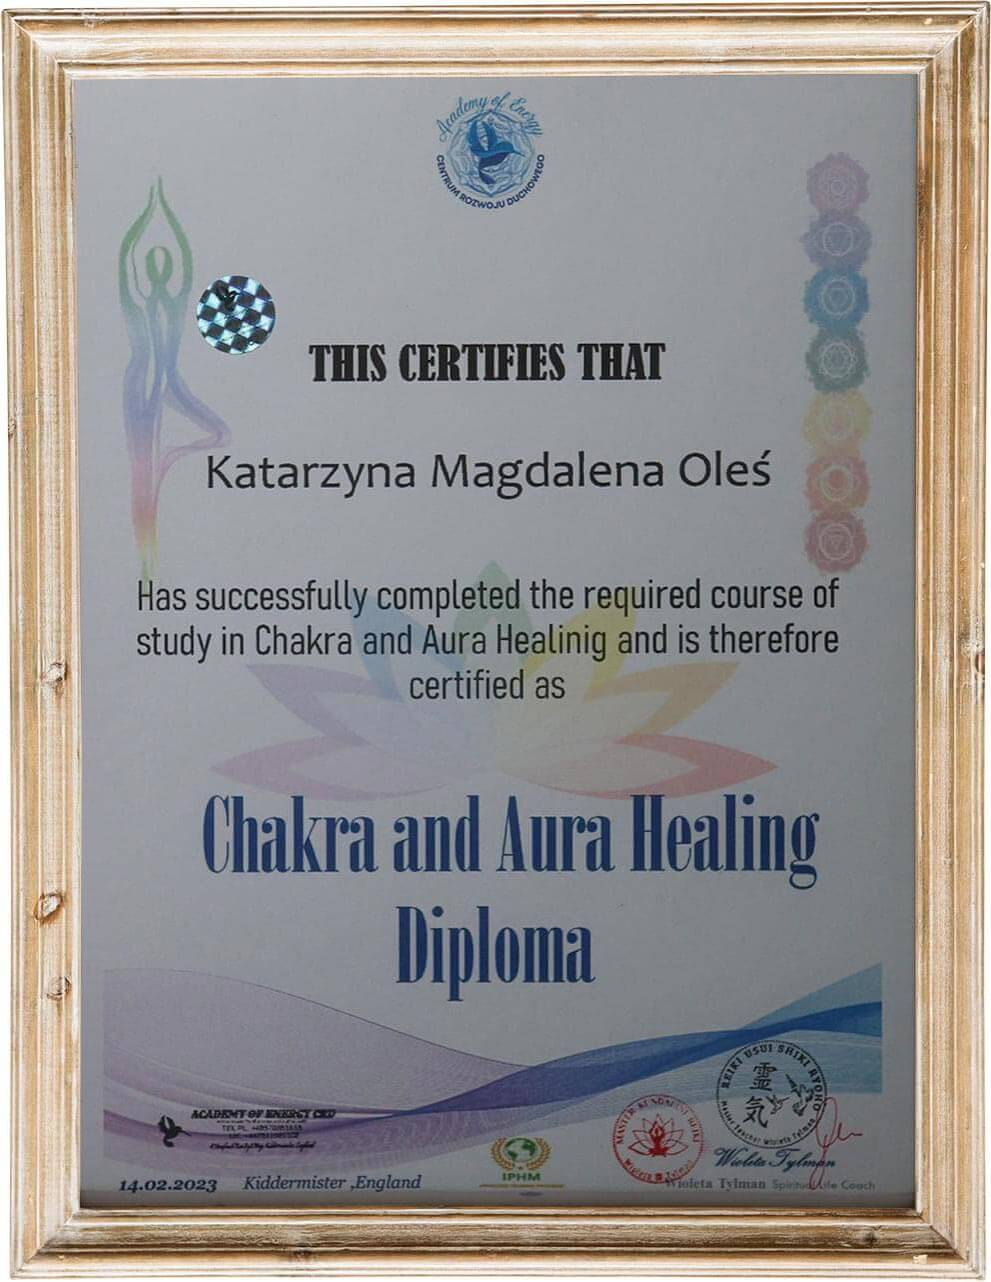 Dyplom "Chakra and Aura Healing"